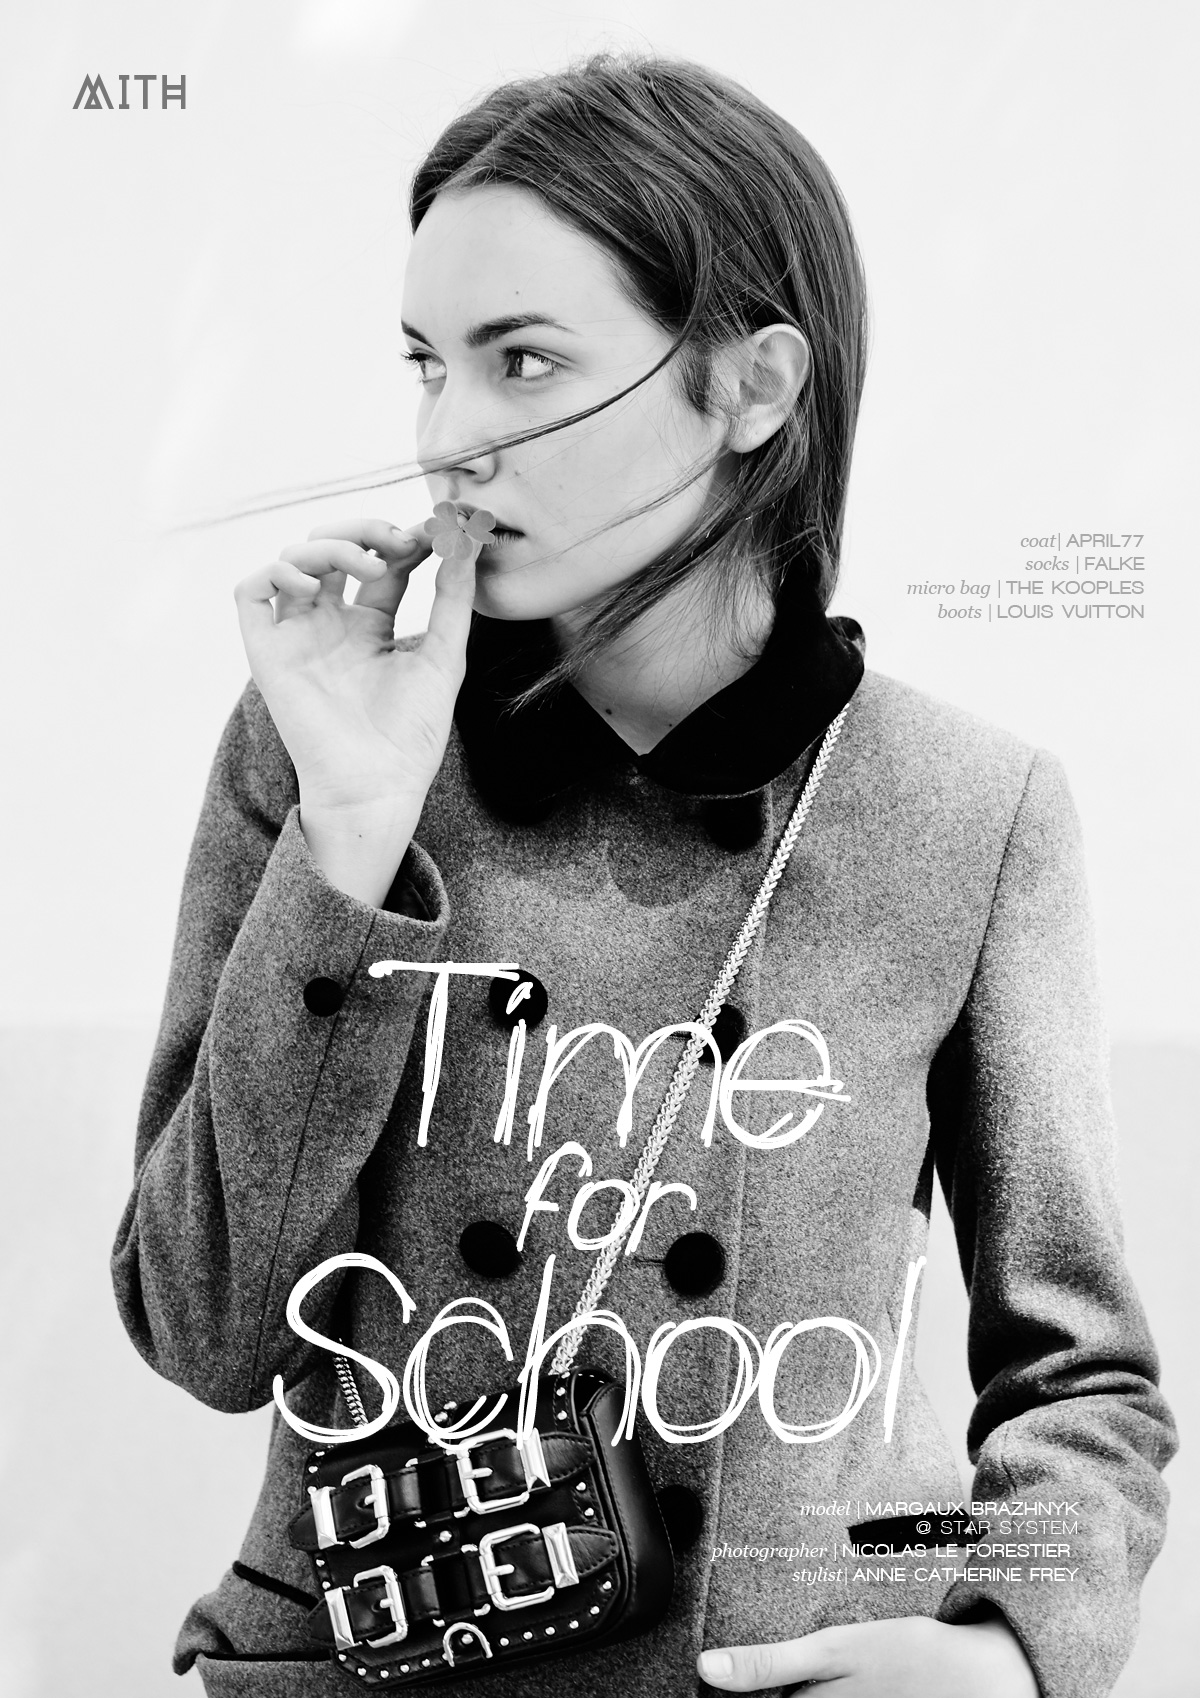 MITH Fashion Editorial - Time for School :: Margaux Brazhnyk @ Star System Models by Nicolas Le Forestier